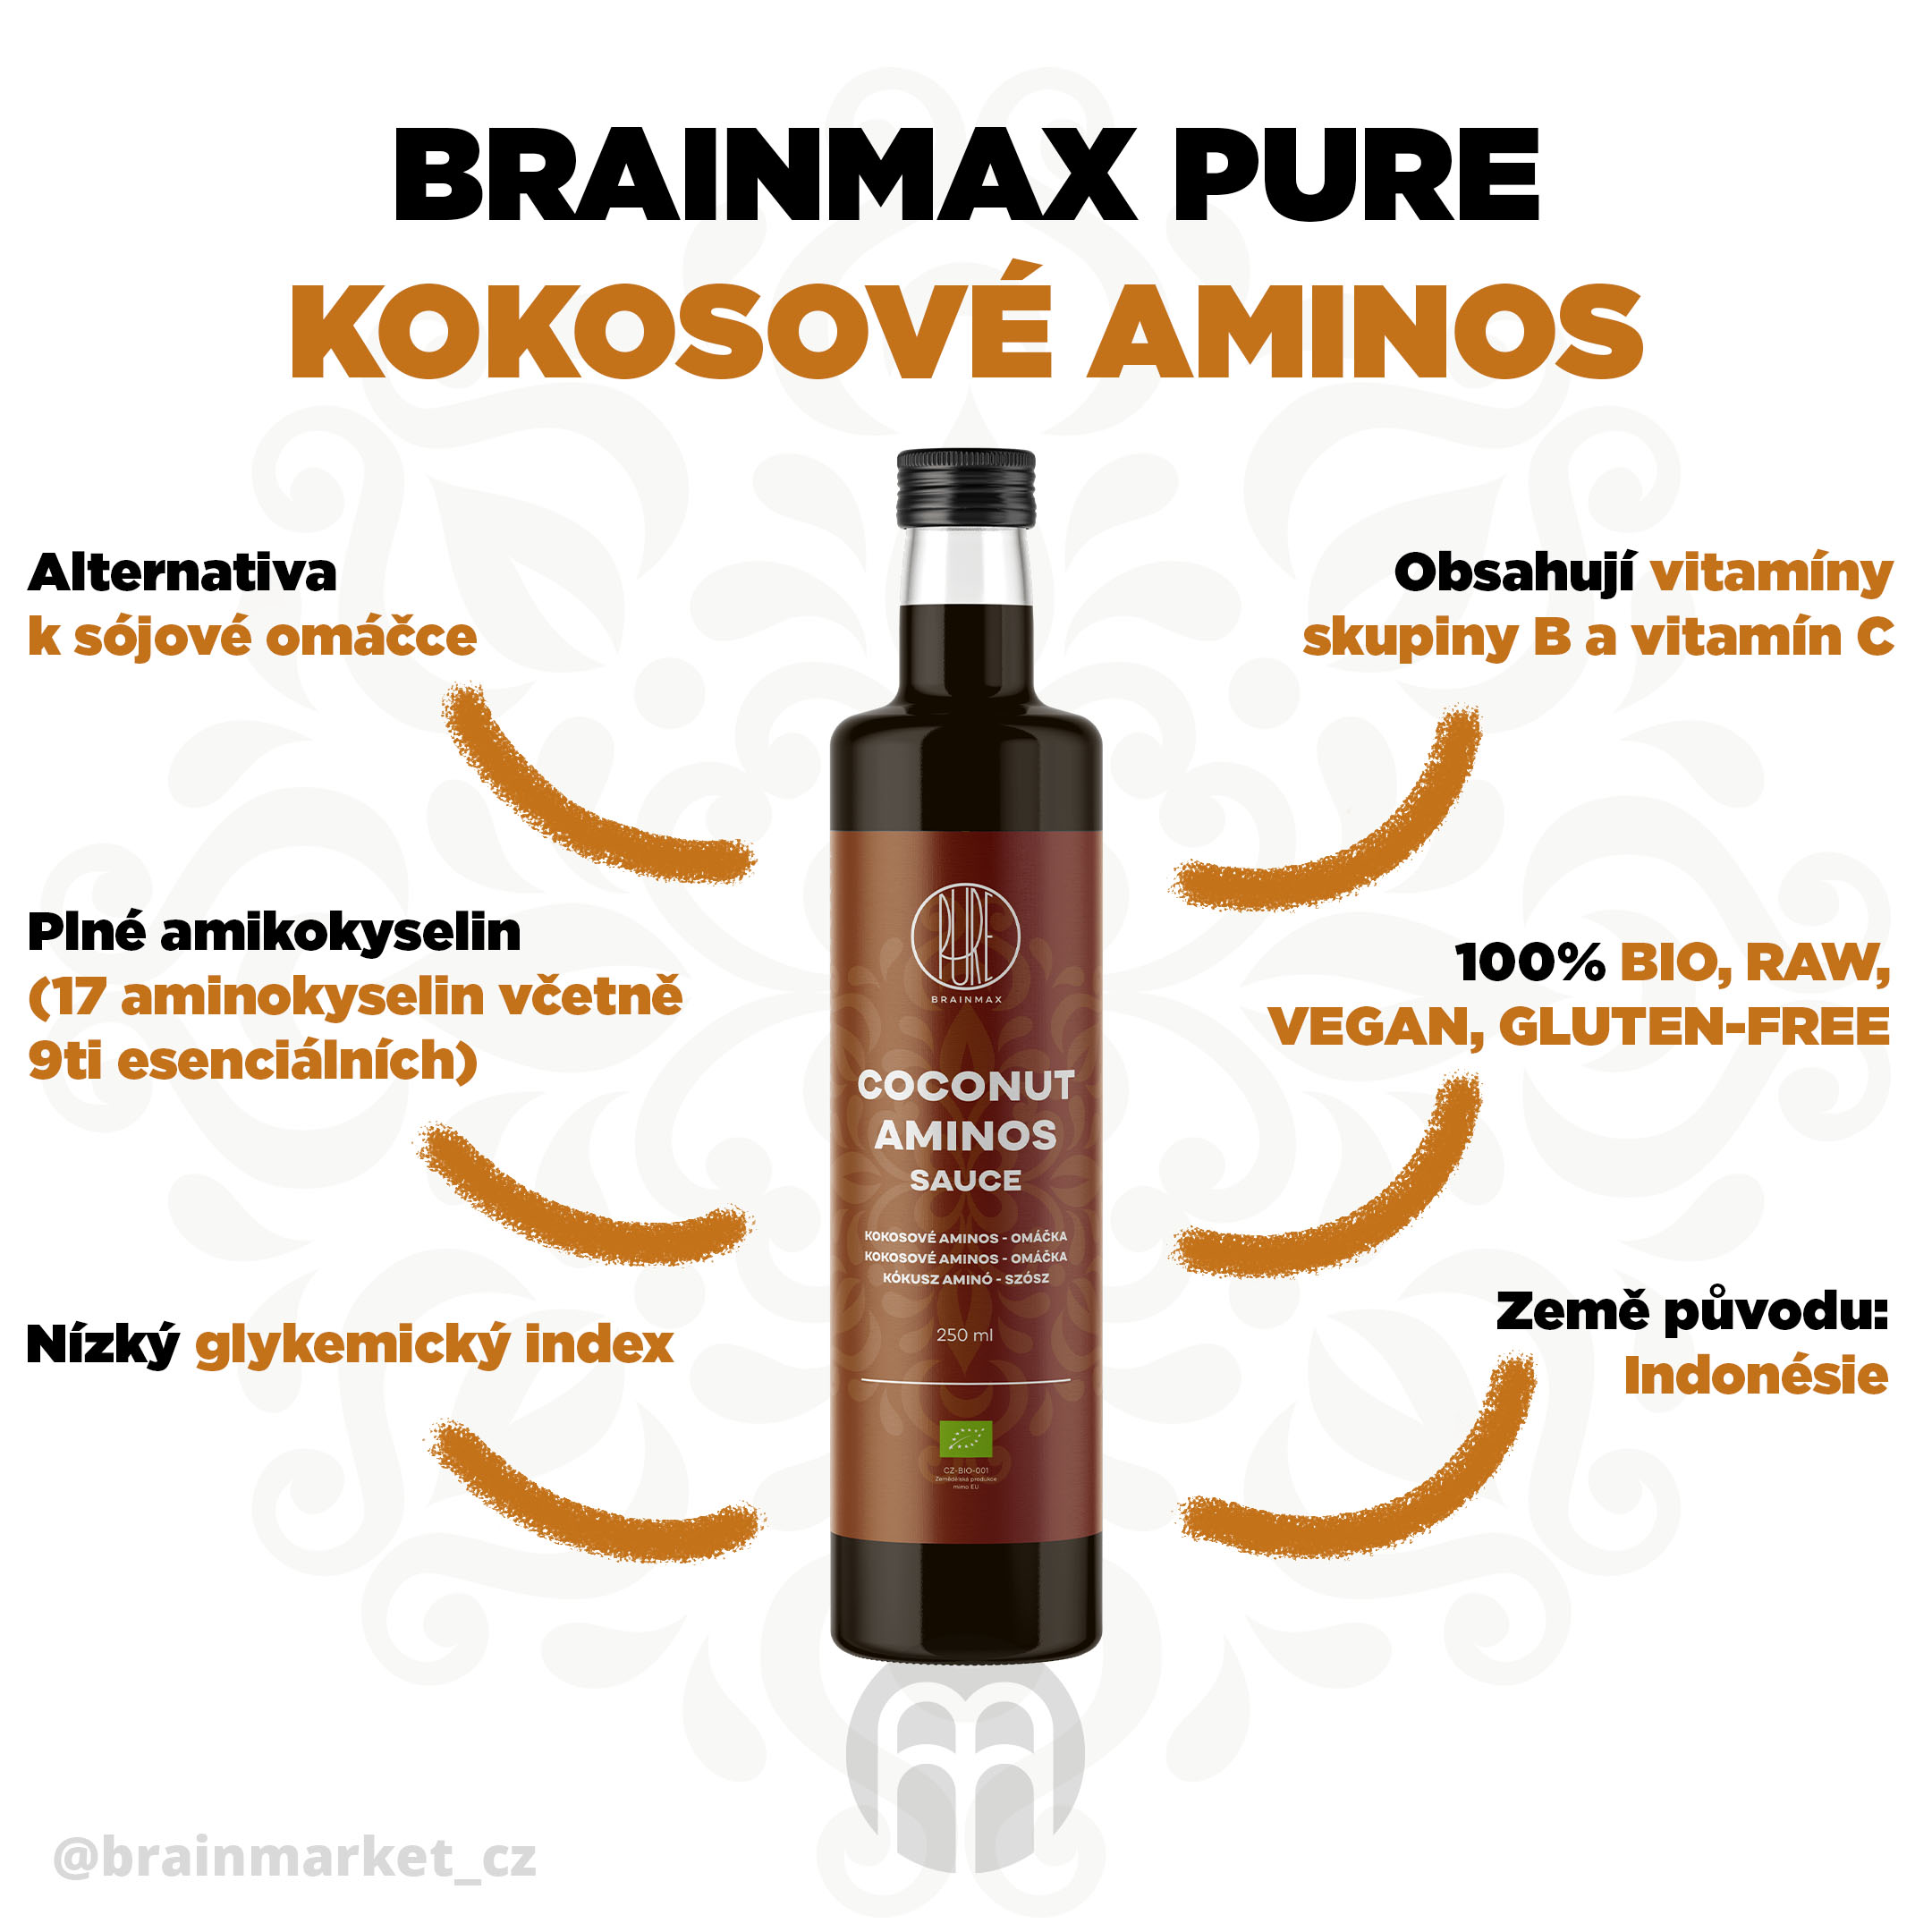 brainmax pure kokos aminos infografika brainmarket CZ